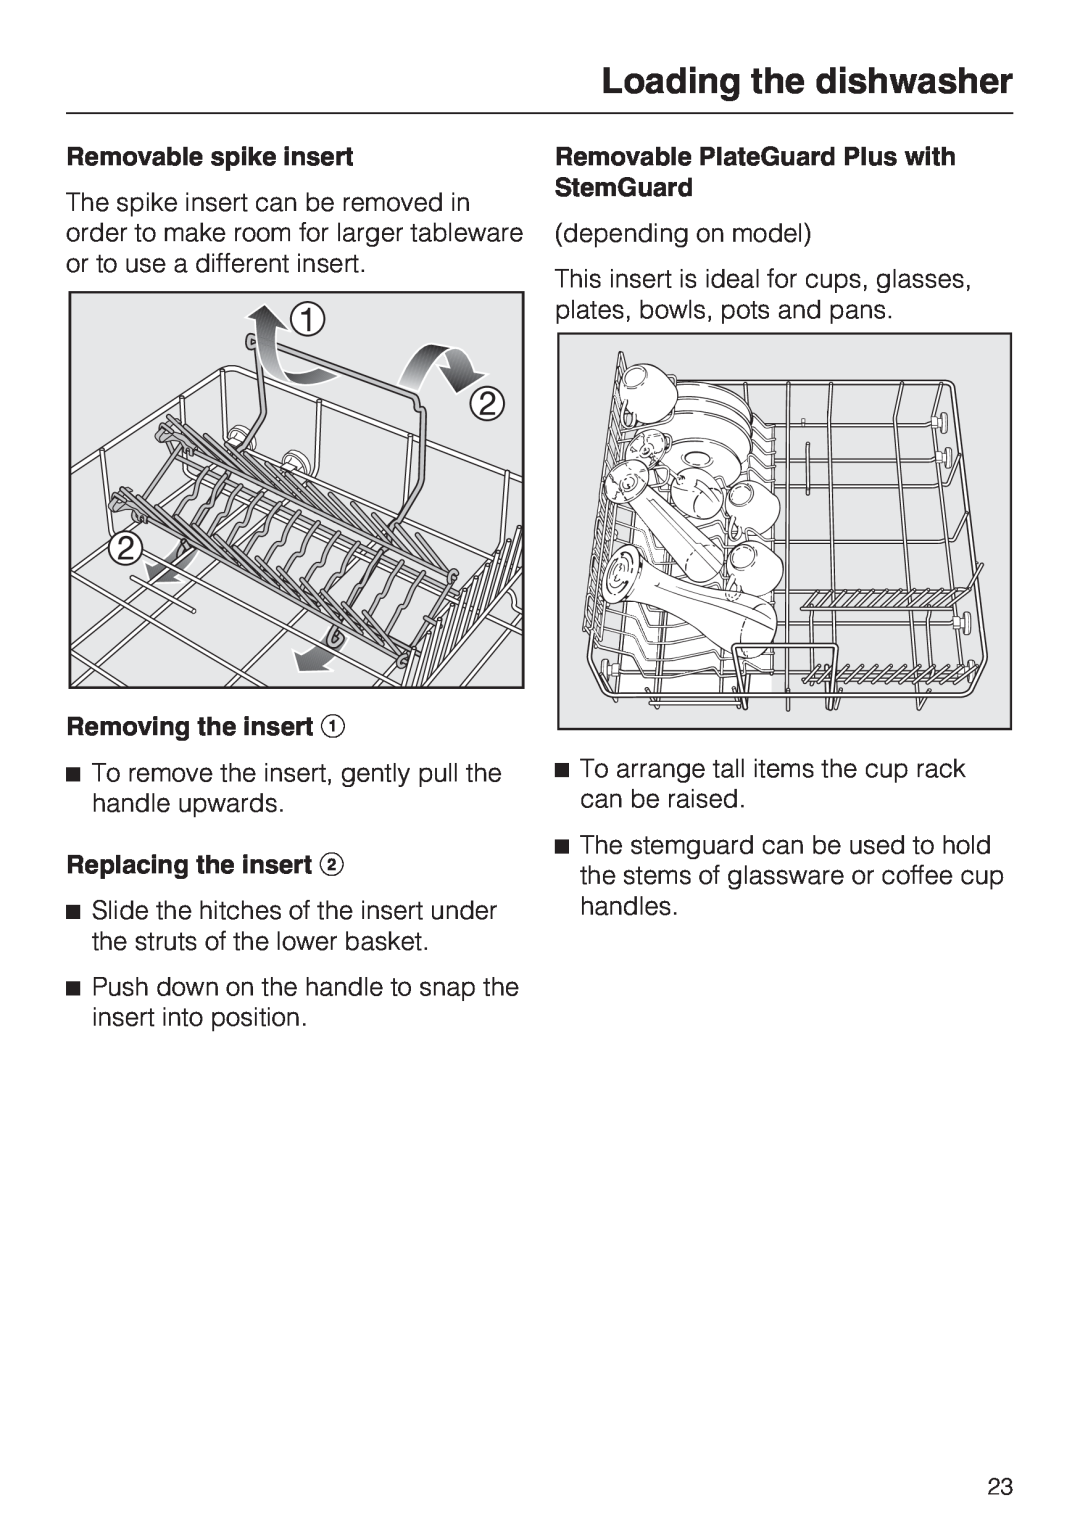 Miele G 1472, G 2472 manual Loading the dishwasher, Removable spike insert, Removing the insert, Replacing the insert 